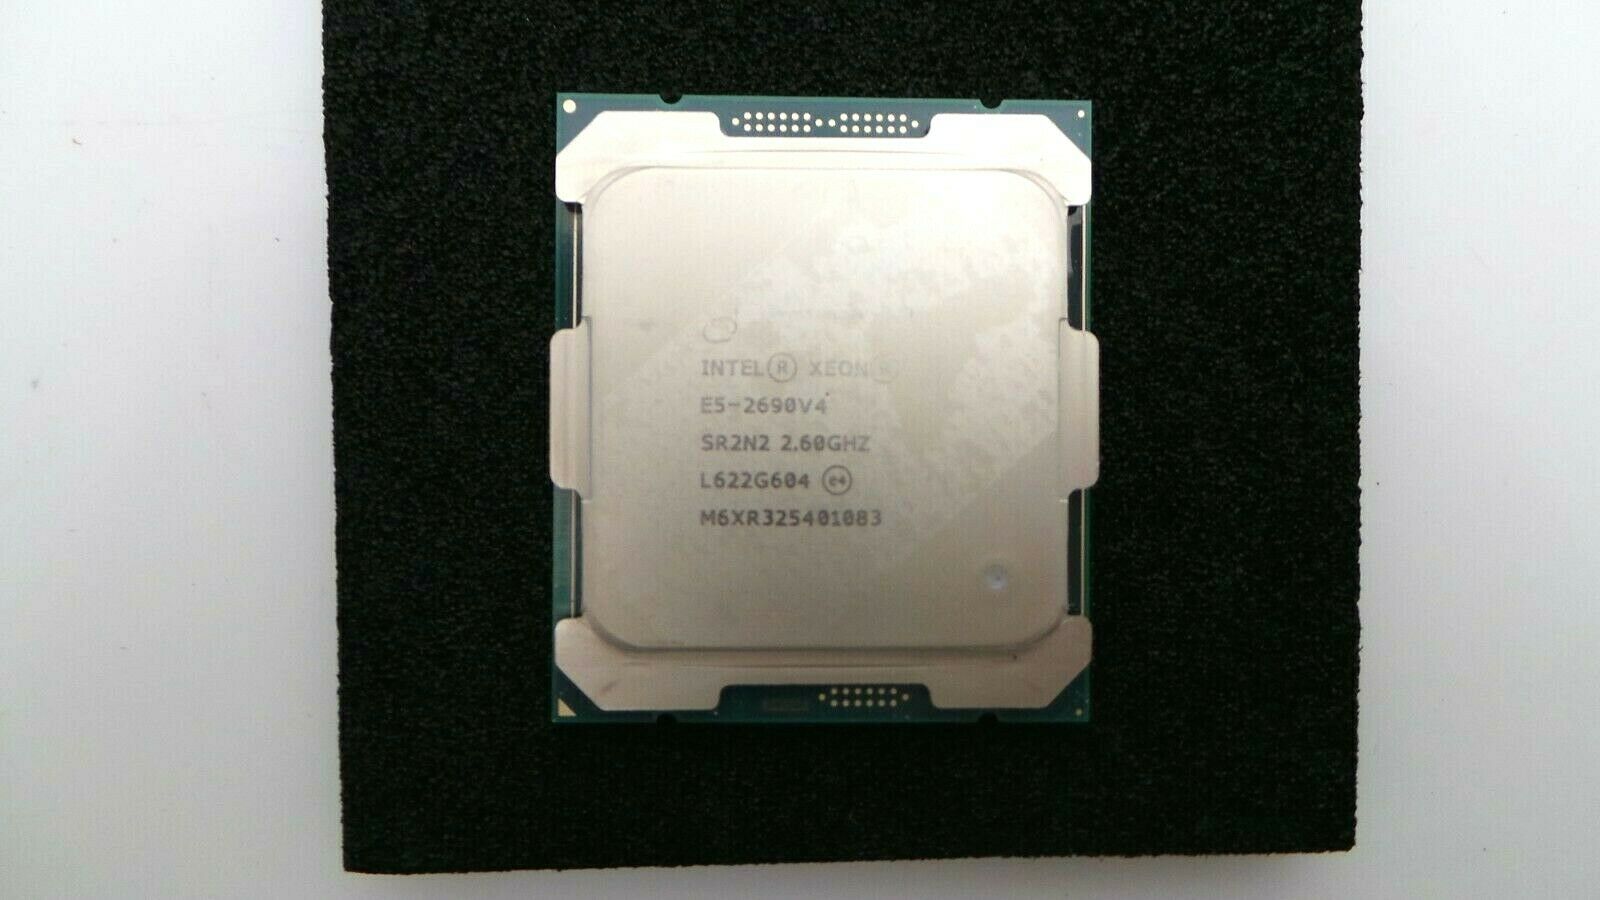 Intel E5-2690V4 Intel Xeon E5-2690V4 14-Core 2.6GHz 35MB 135W 14C Processor SR2N2 w/ Thermal Grease, Used